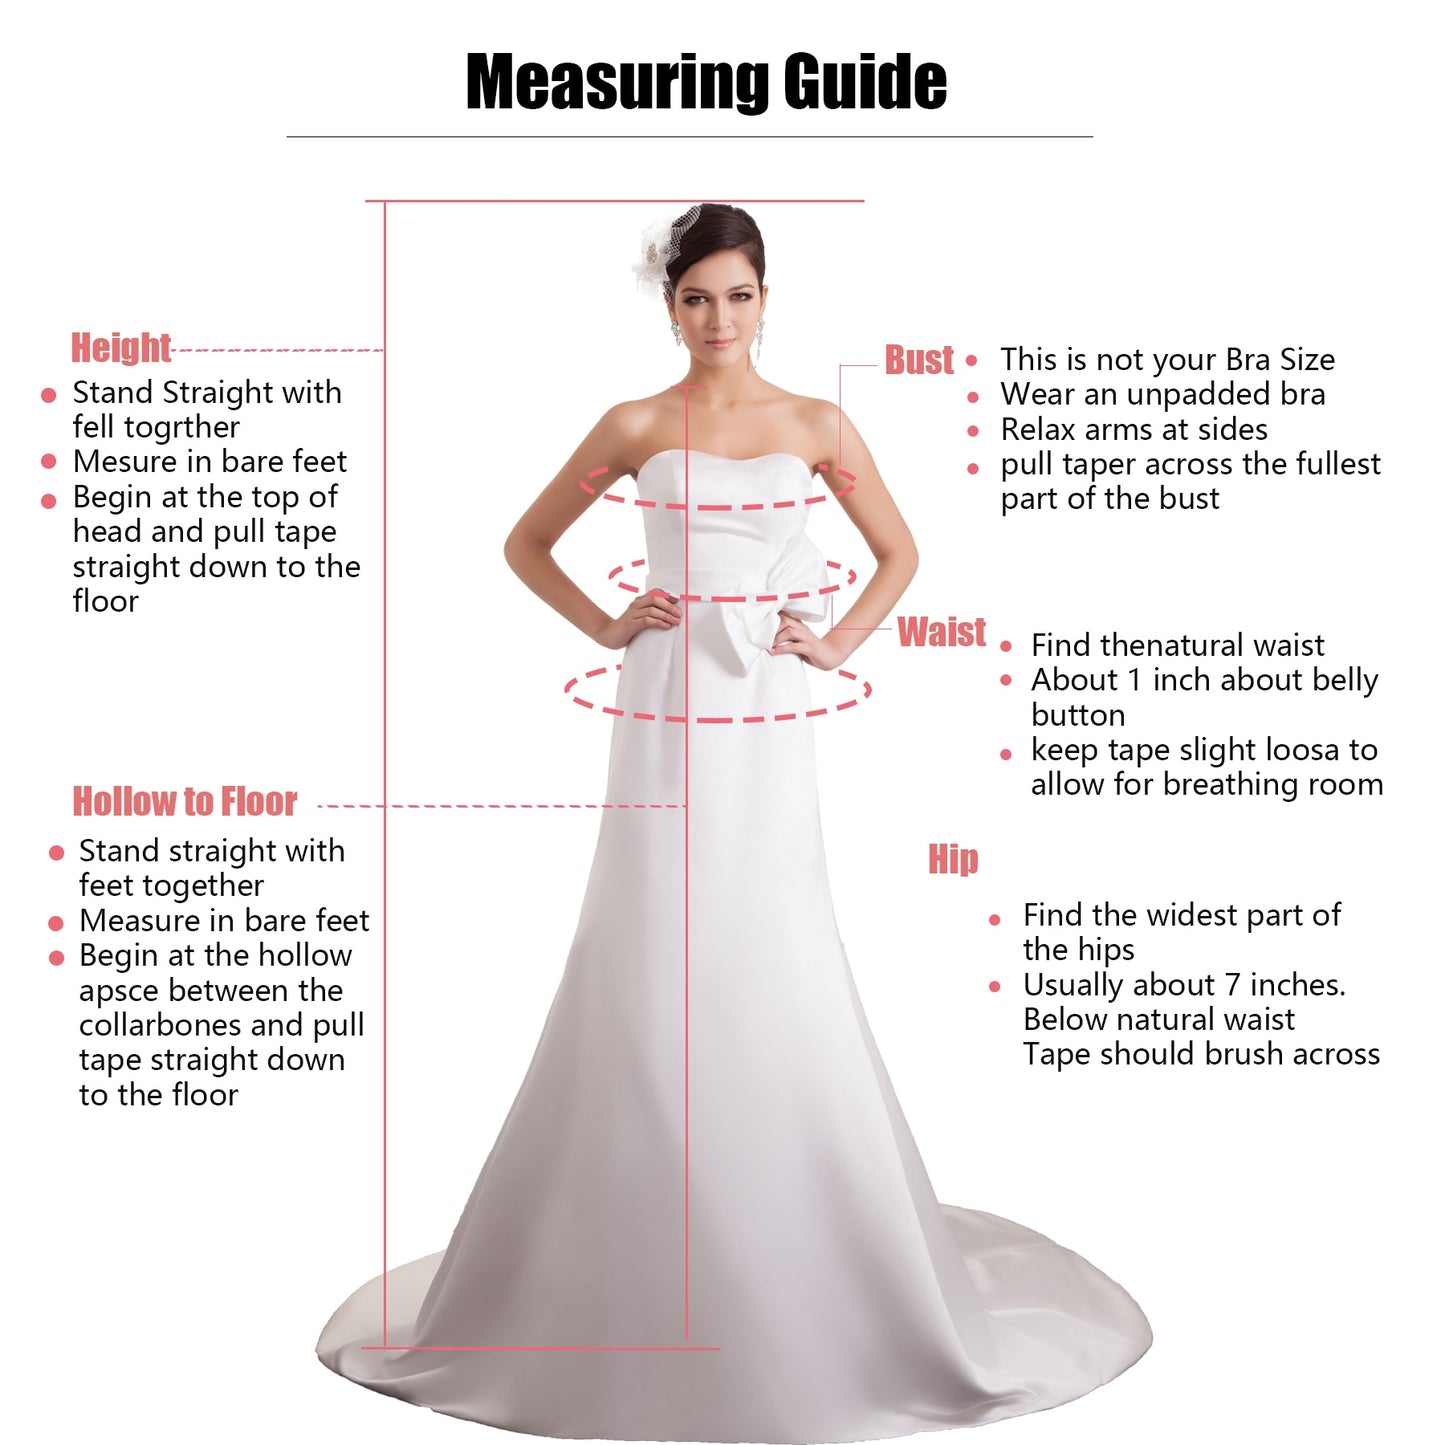 Mermaid Wedding Dress w/ Detachable Train